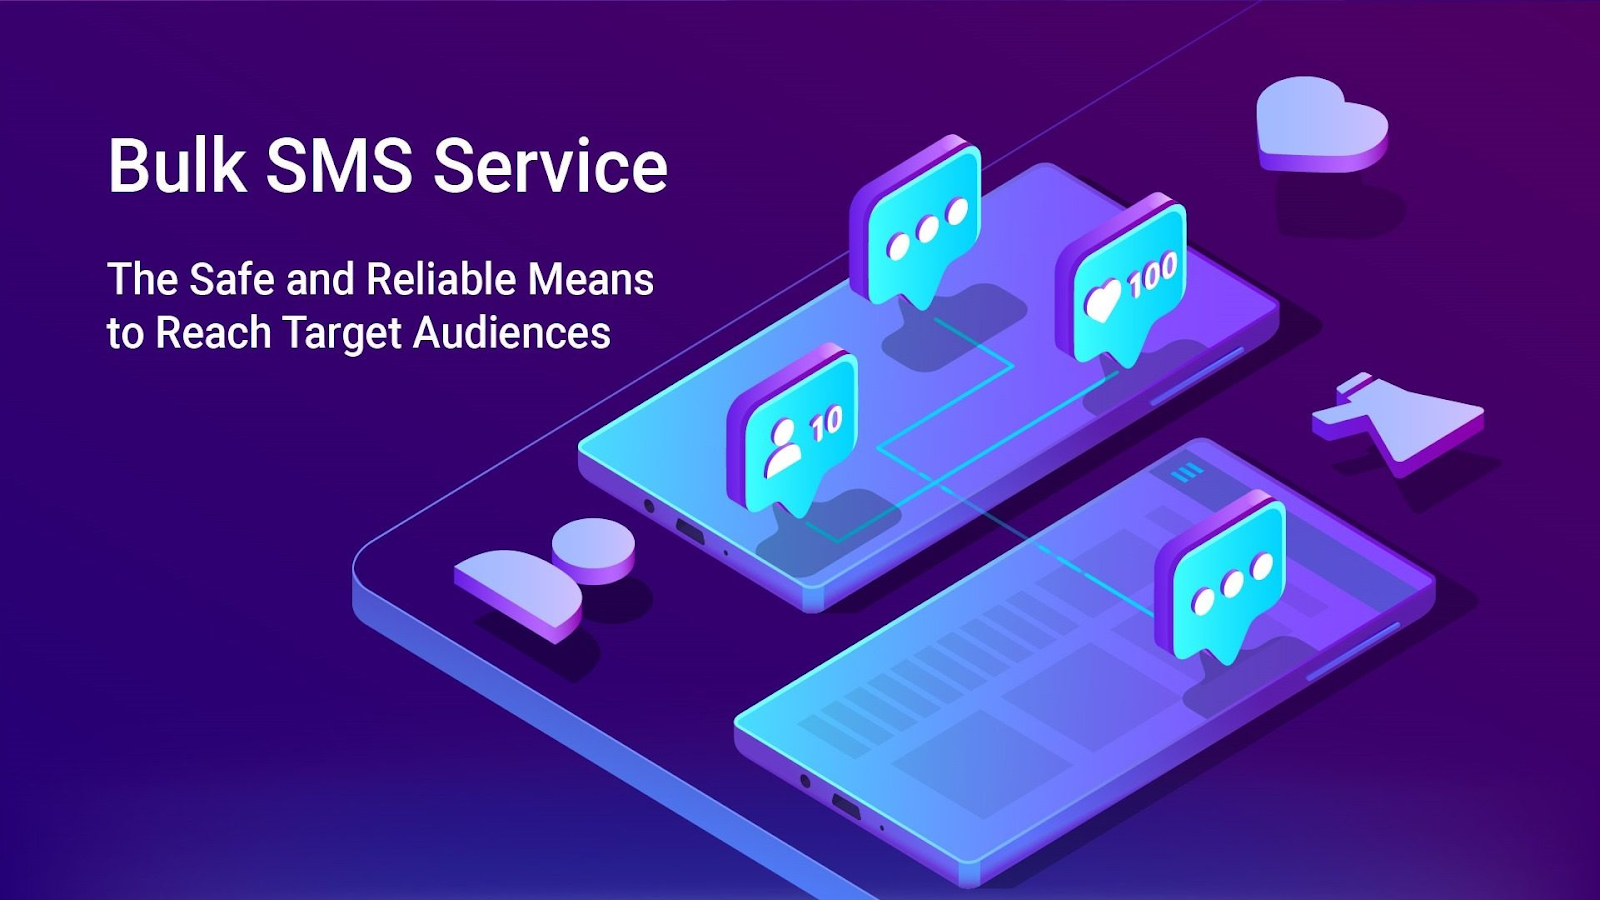 Bulk SMS Services